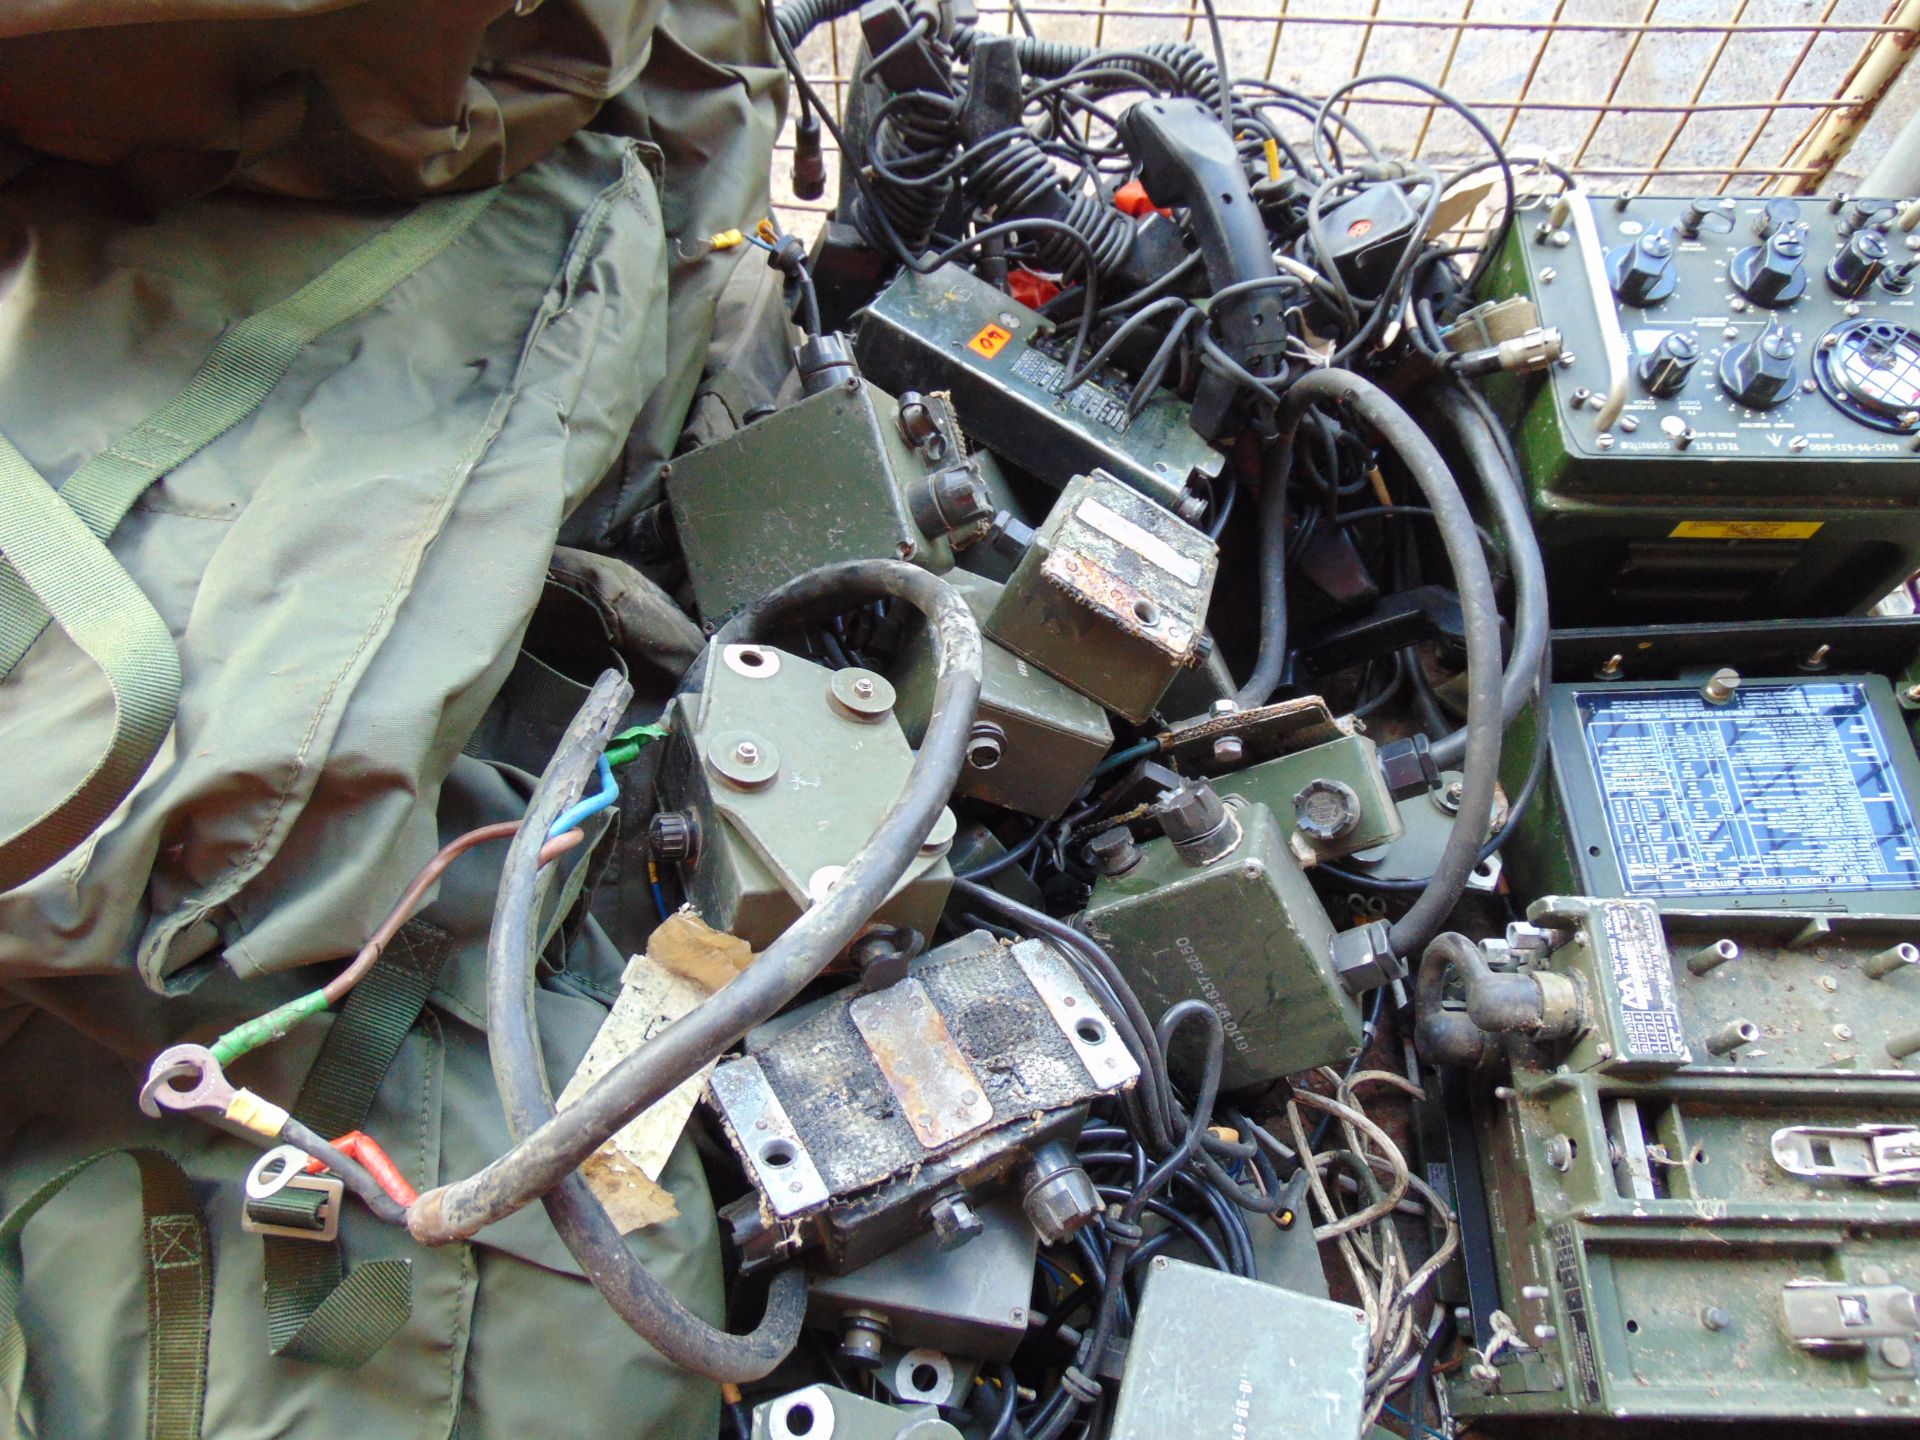 1 x Stillage of Clansman Radio Equipment inc Transmitter, Test Sets, Charger, Cables, Handsets etc - Image 5 of 12